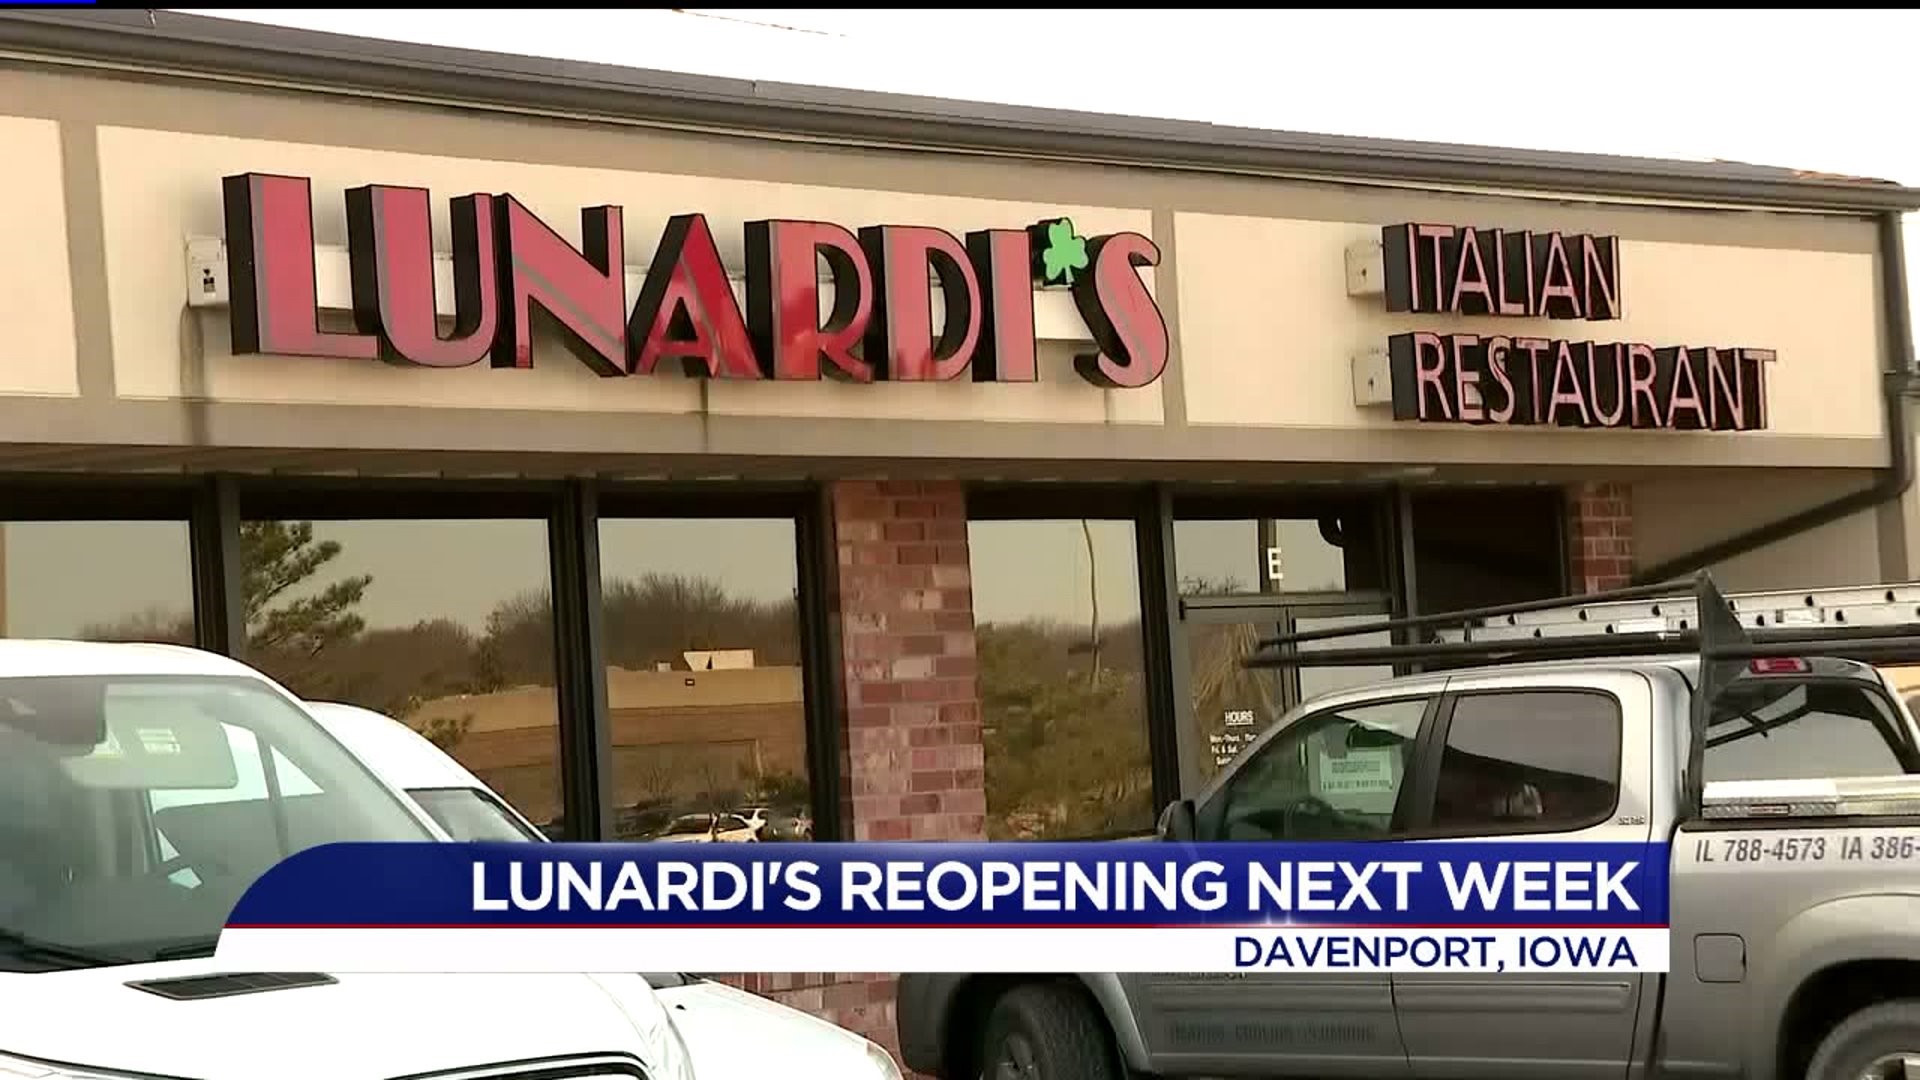 Lundardi`s reopening